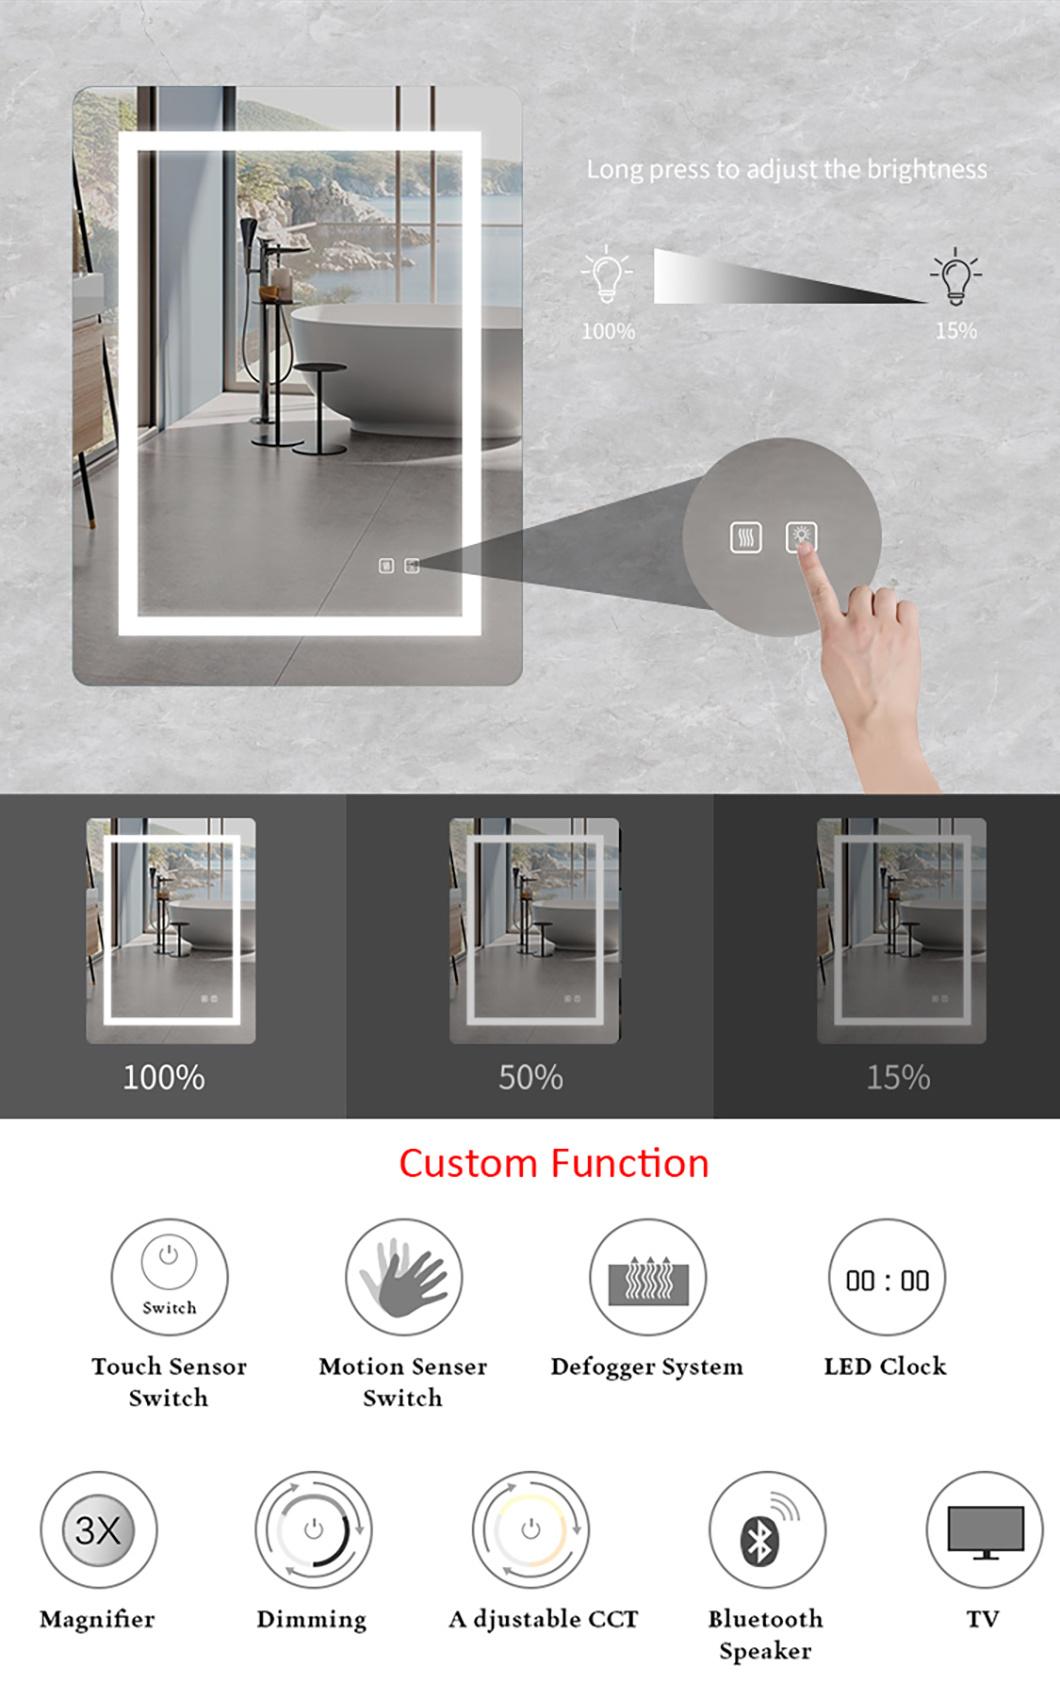 Oval Golden Frame Bathroom Mirror Glass Custom with Sensor